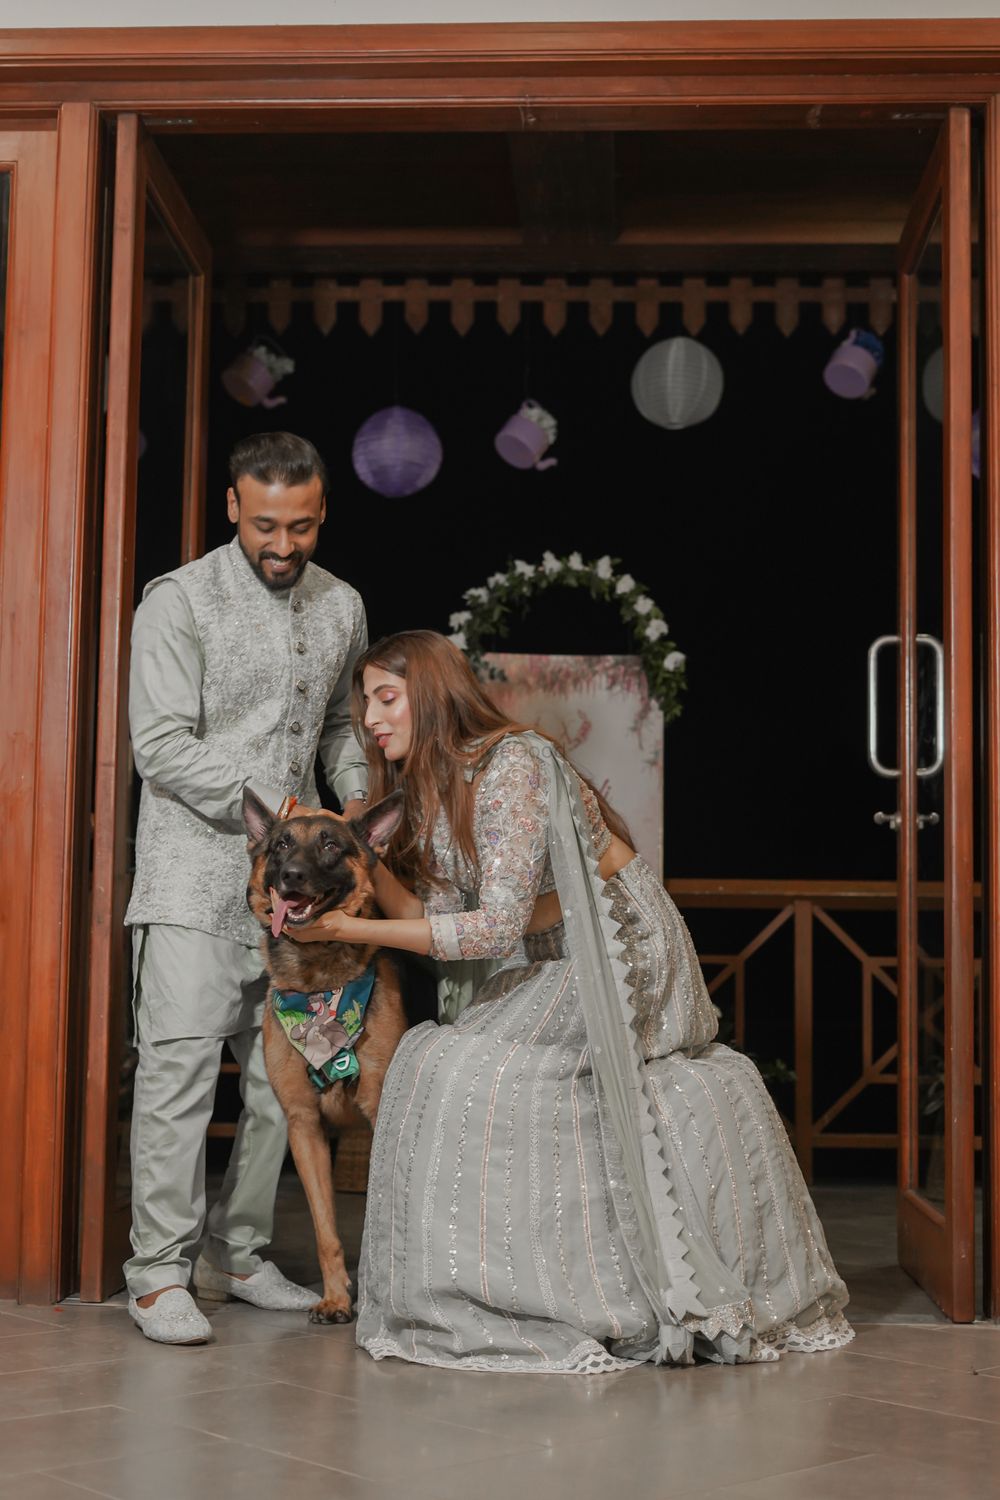 Photo From Aishwariya & Ishu - By CelebLuk Weddings